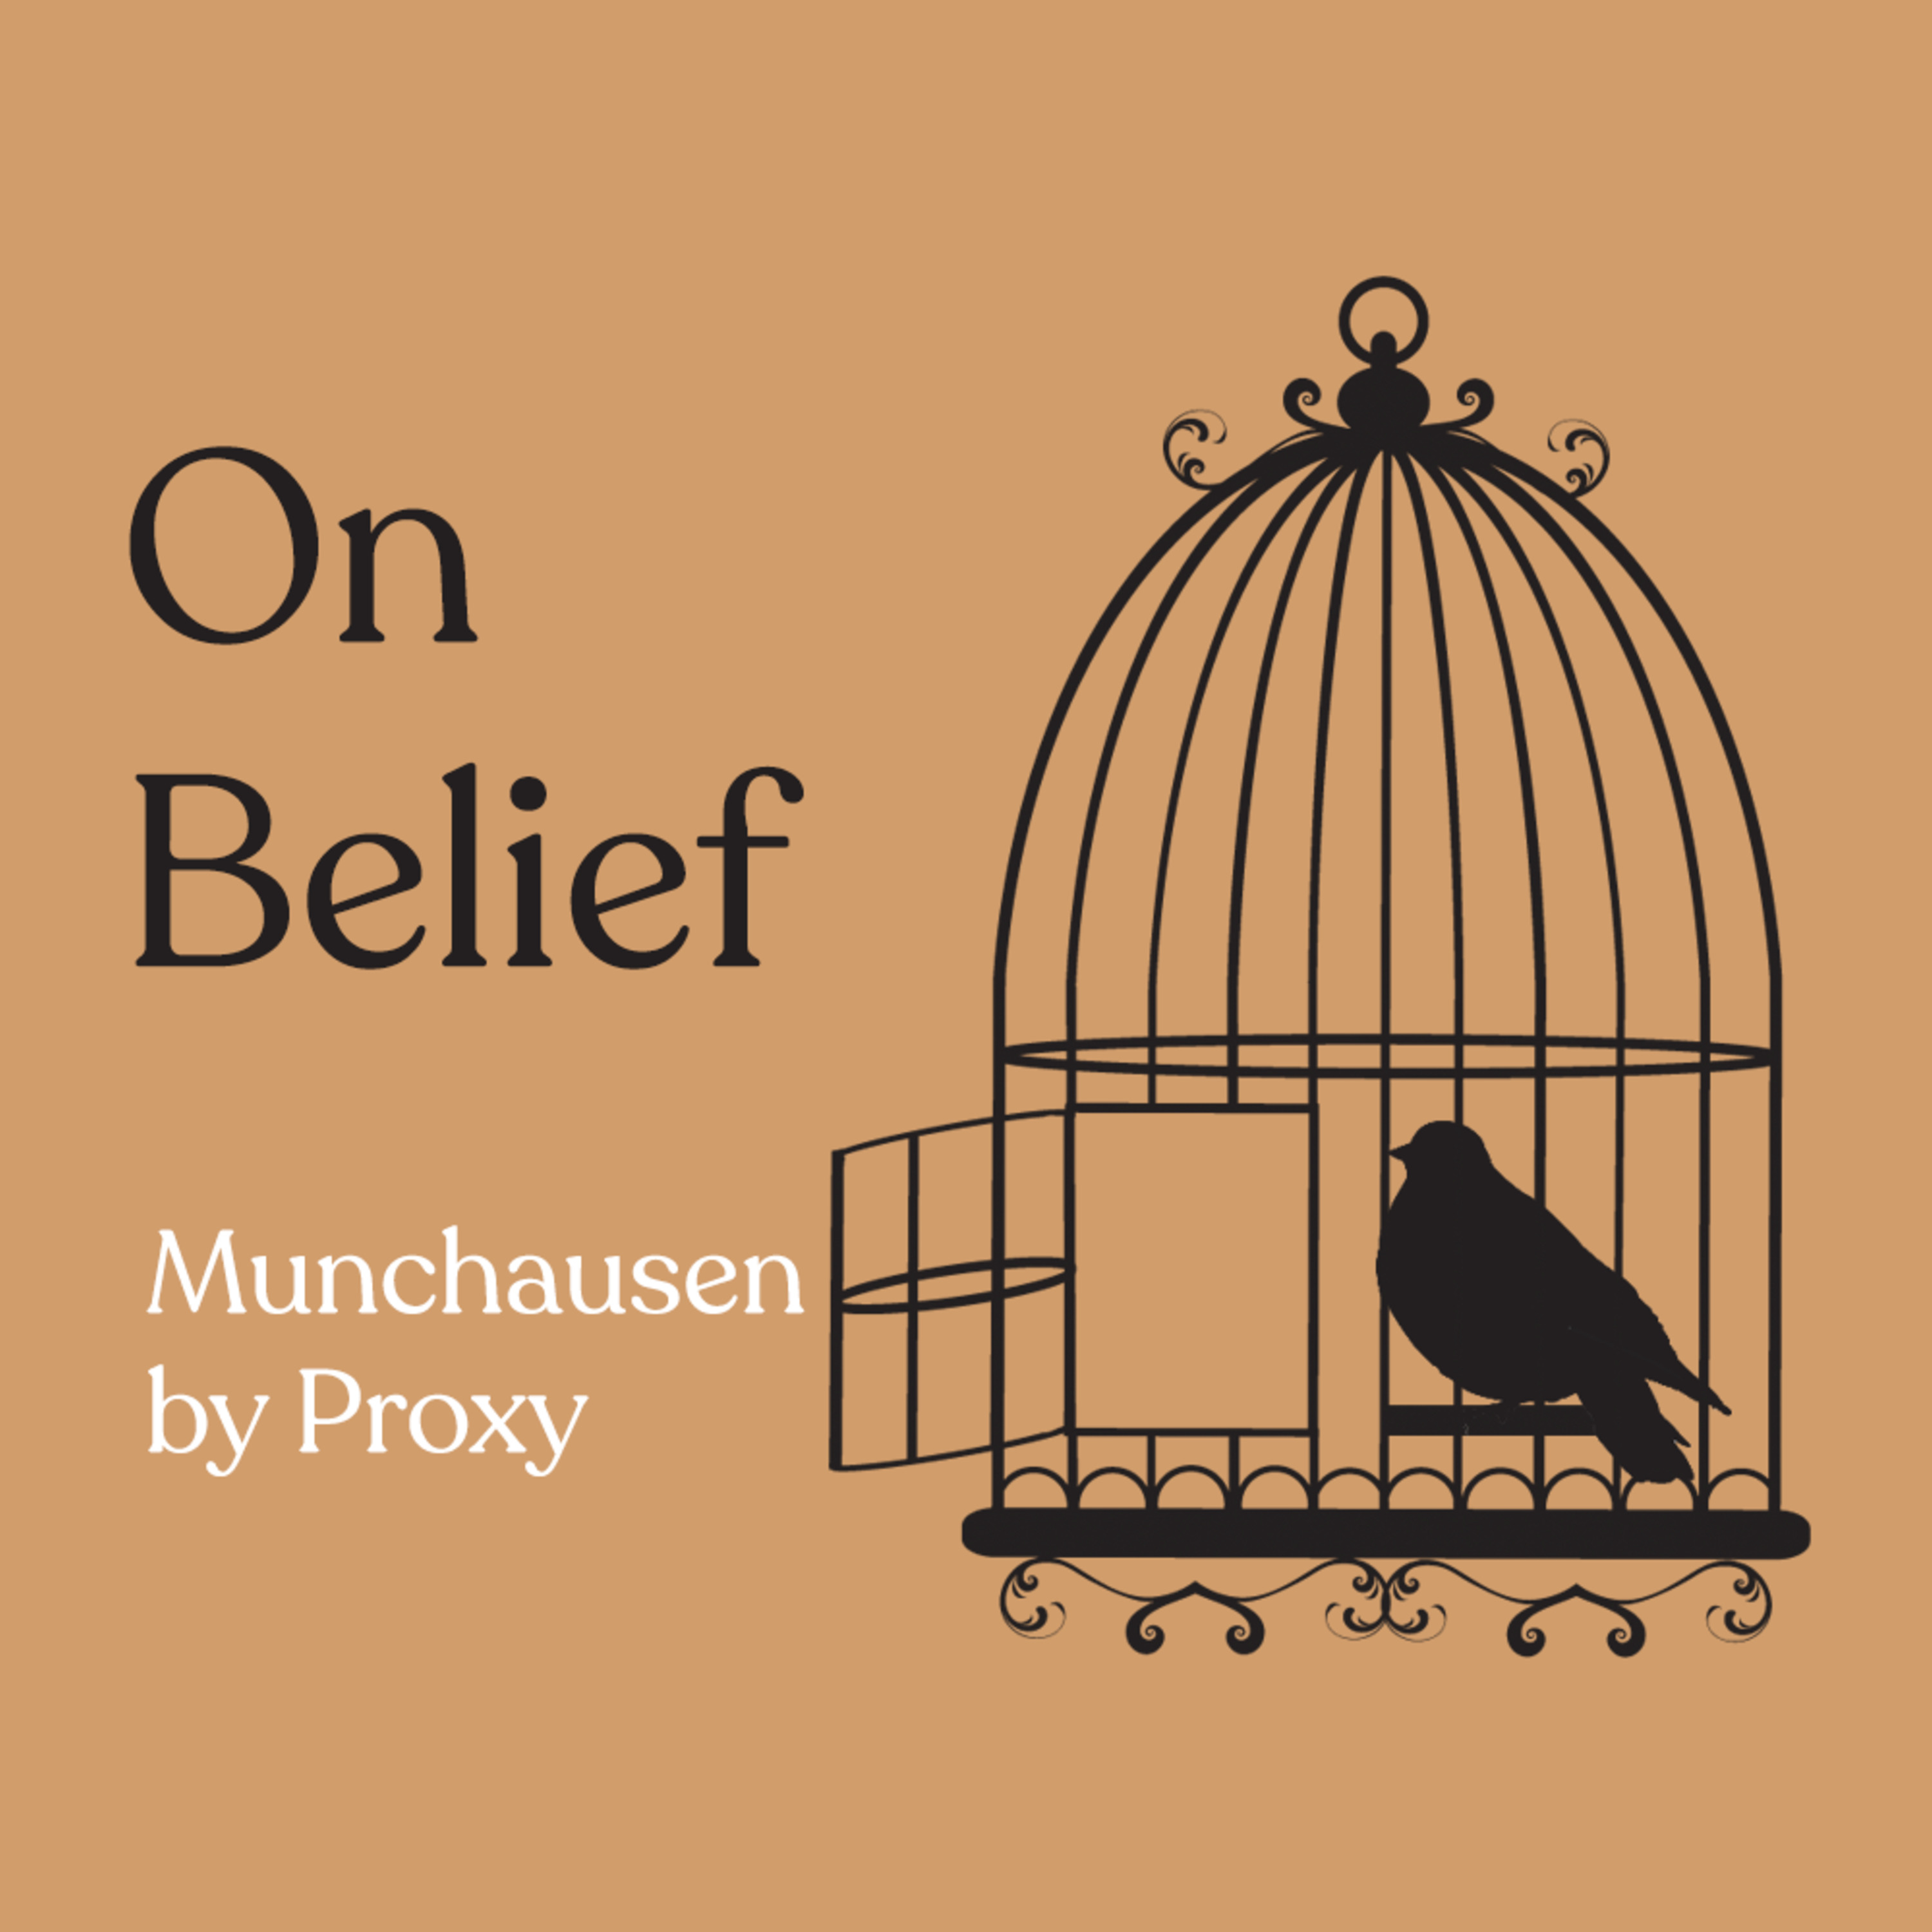 Episode 203: Munchausen By Proxy With Dr. Marc Feldman and Judy Tienken